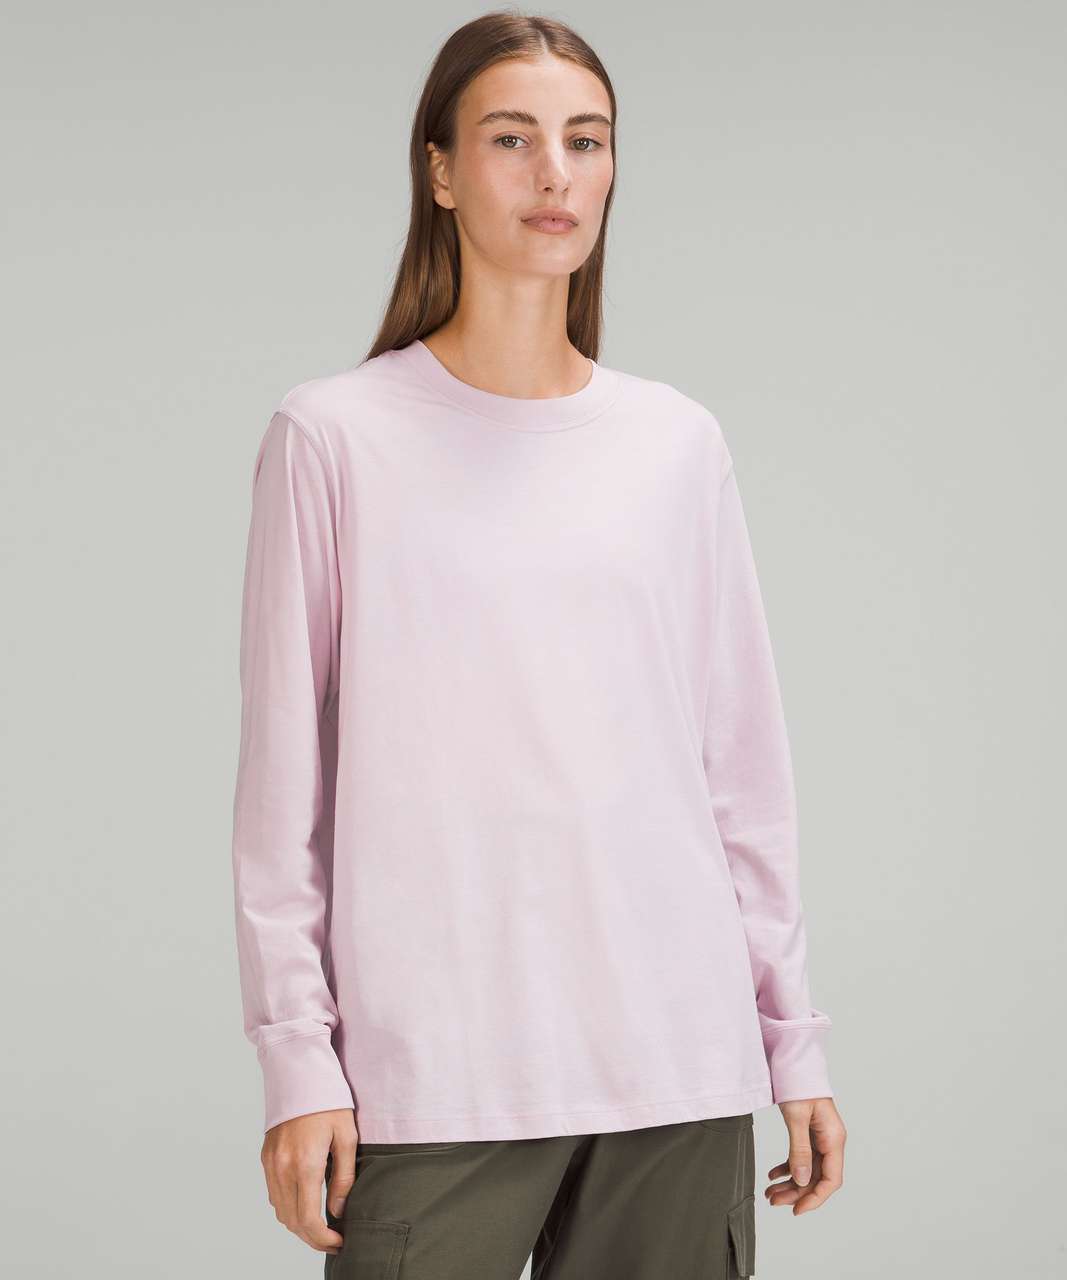 Lululemon All Yours Long Sleeve Shirt - Pink Peony